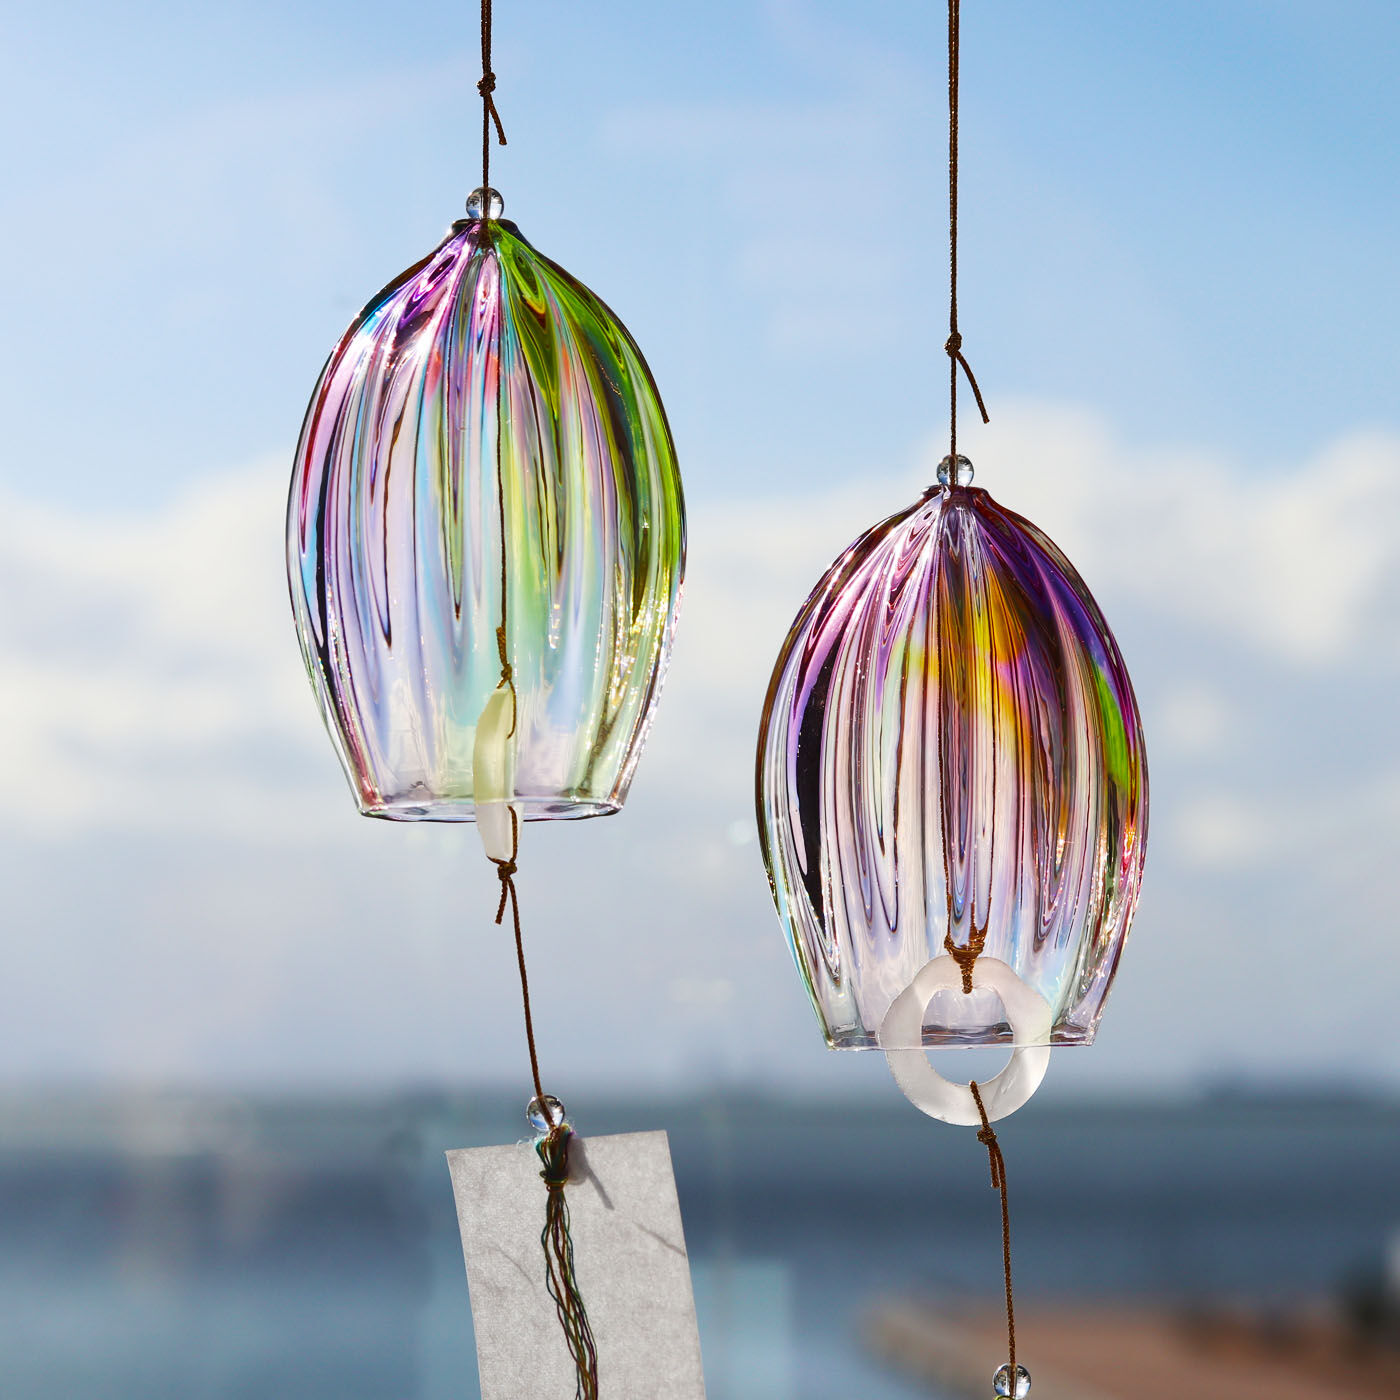 ＆Stories|小田原のガラス職人が作った　オーロラが溶け込んだ宙吹き風鈴|オーロラを溶かしたような色合いの風鈴は、神奈川県小田原市のガラス工房〈glass calico〉のオリジナルアイテム。